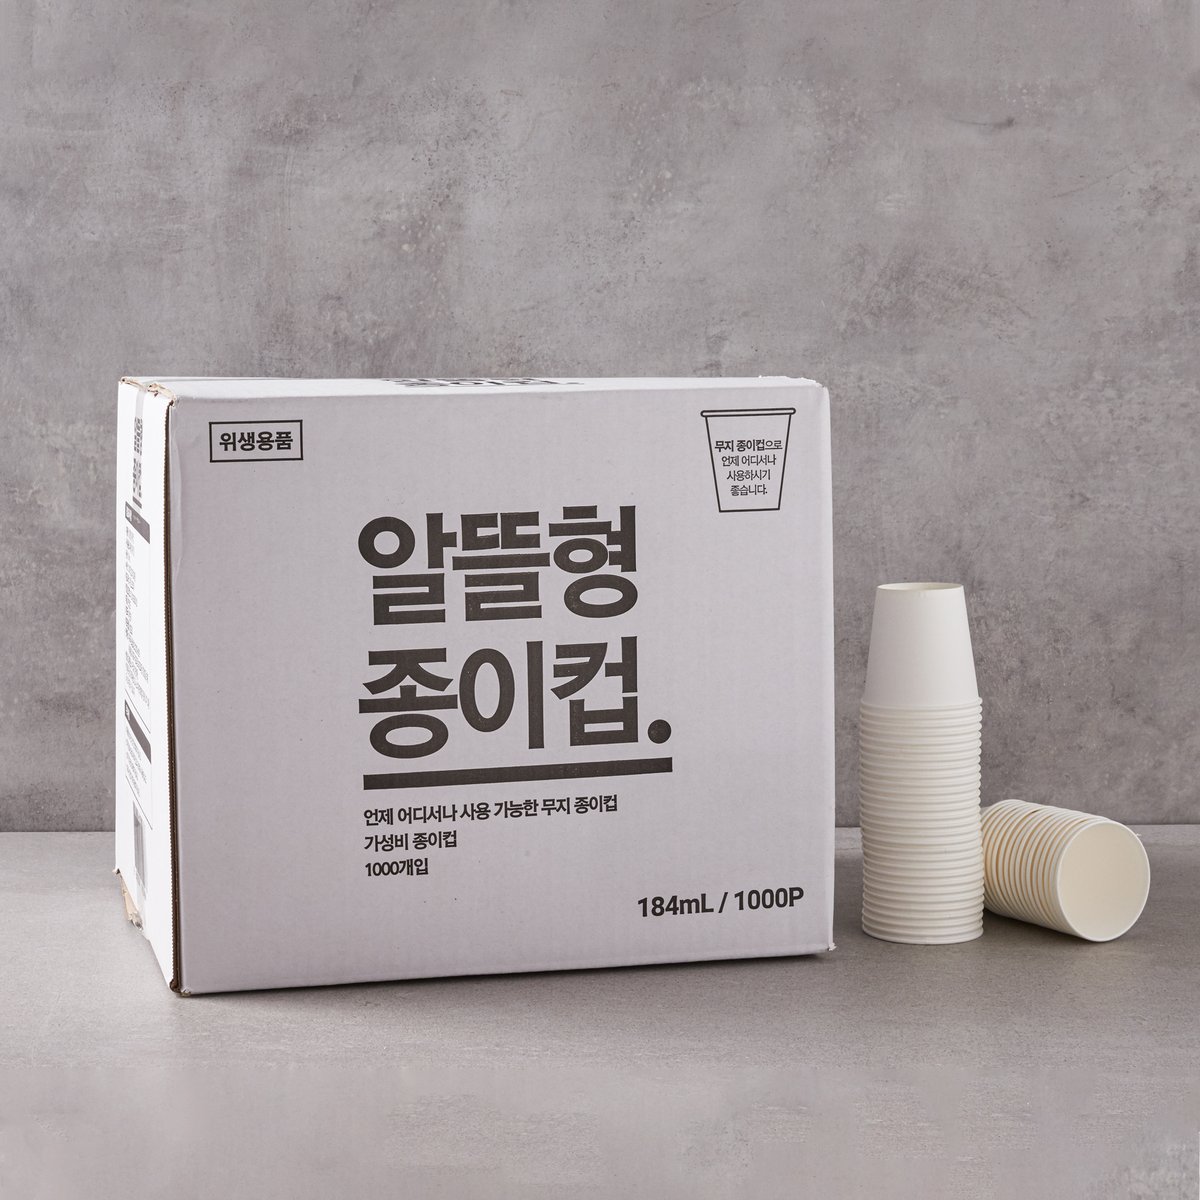 [ONLY SSG]알뜰형 종이컵 1 BOX (1,000개)